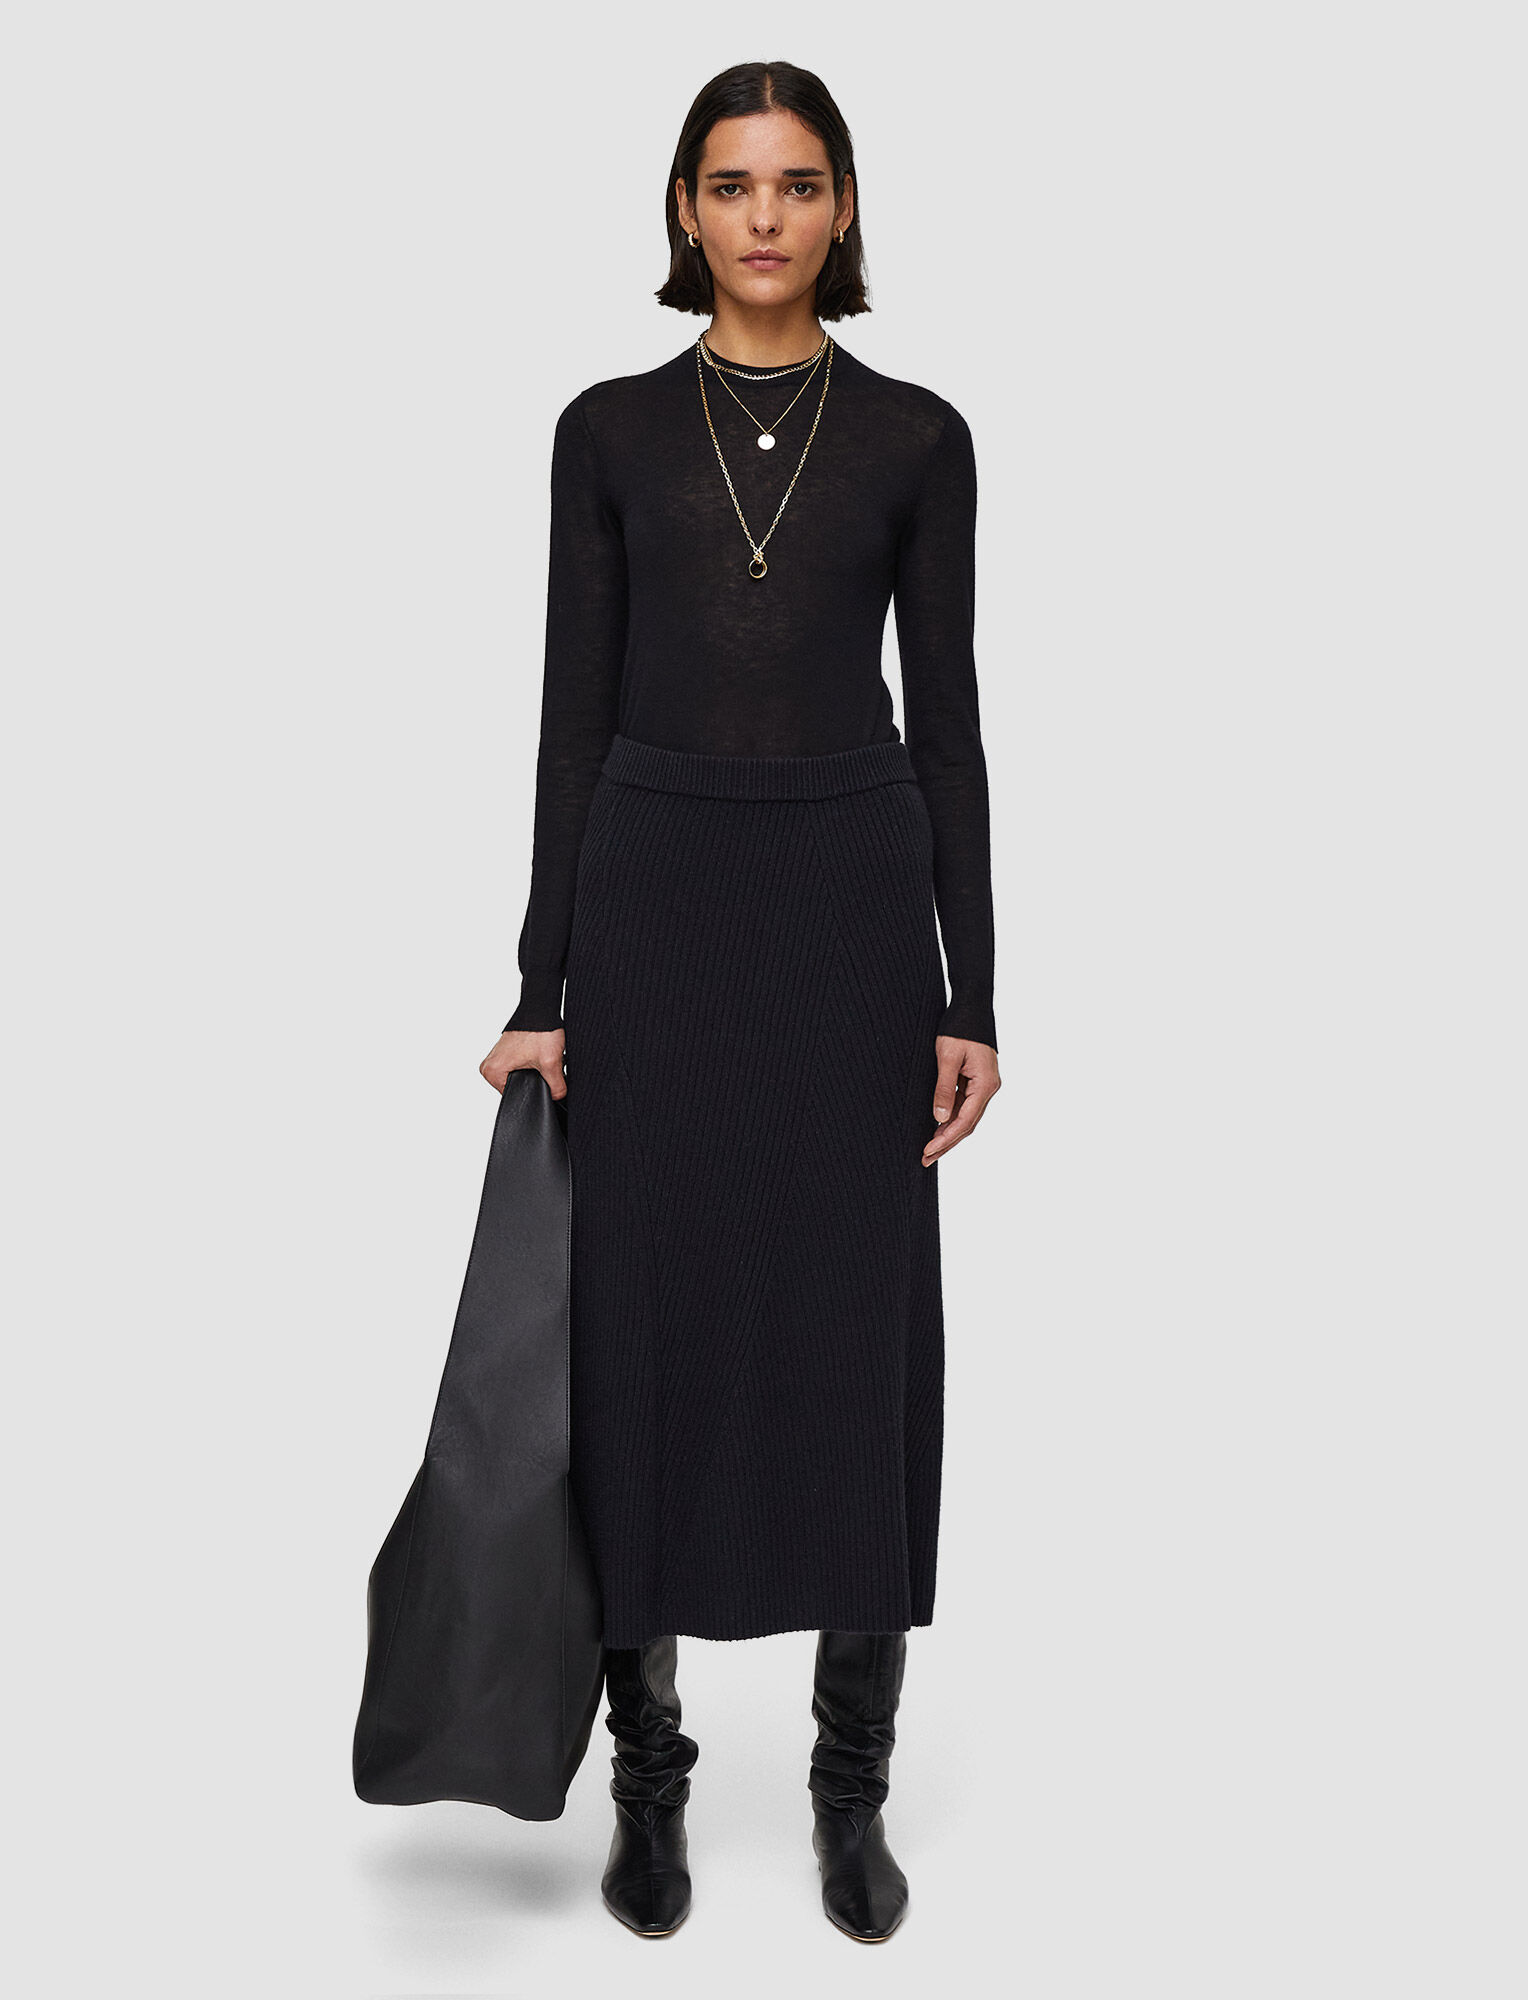 Joseph, Luxe Cardigan Stitch Skirt, in Black